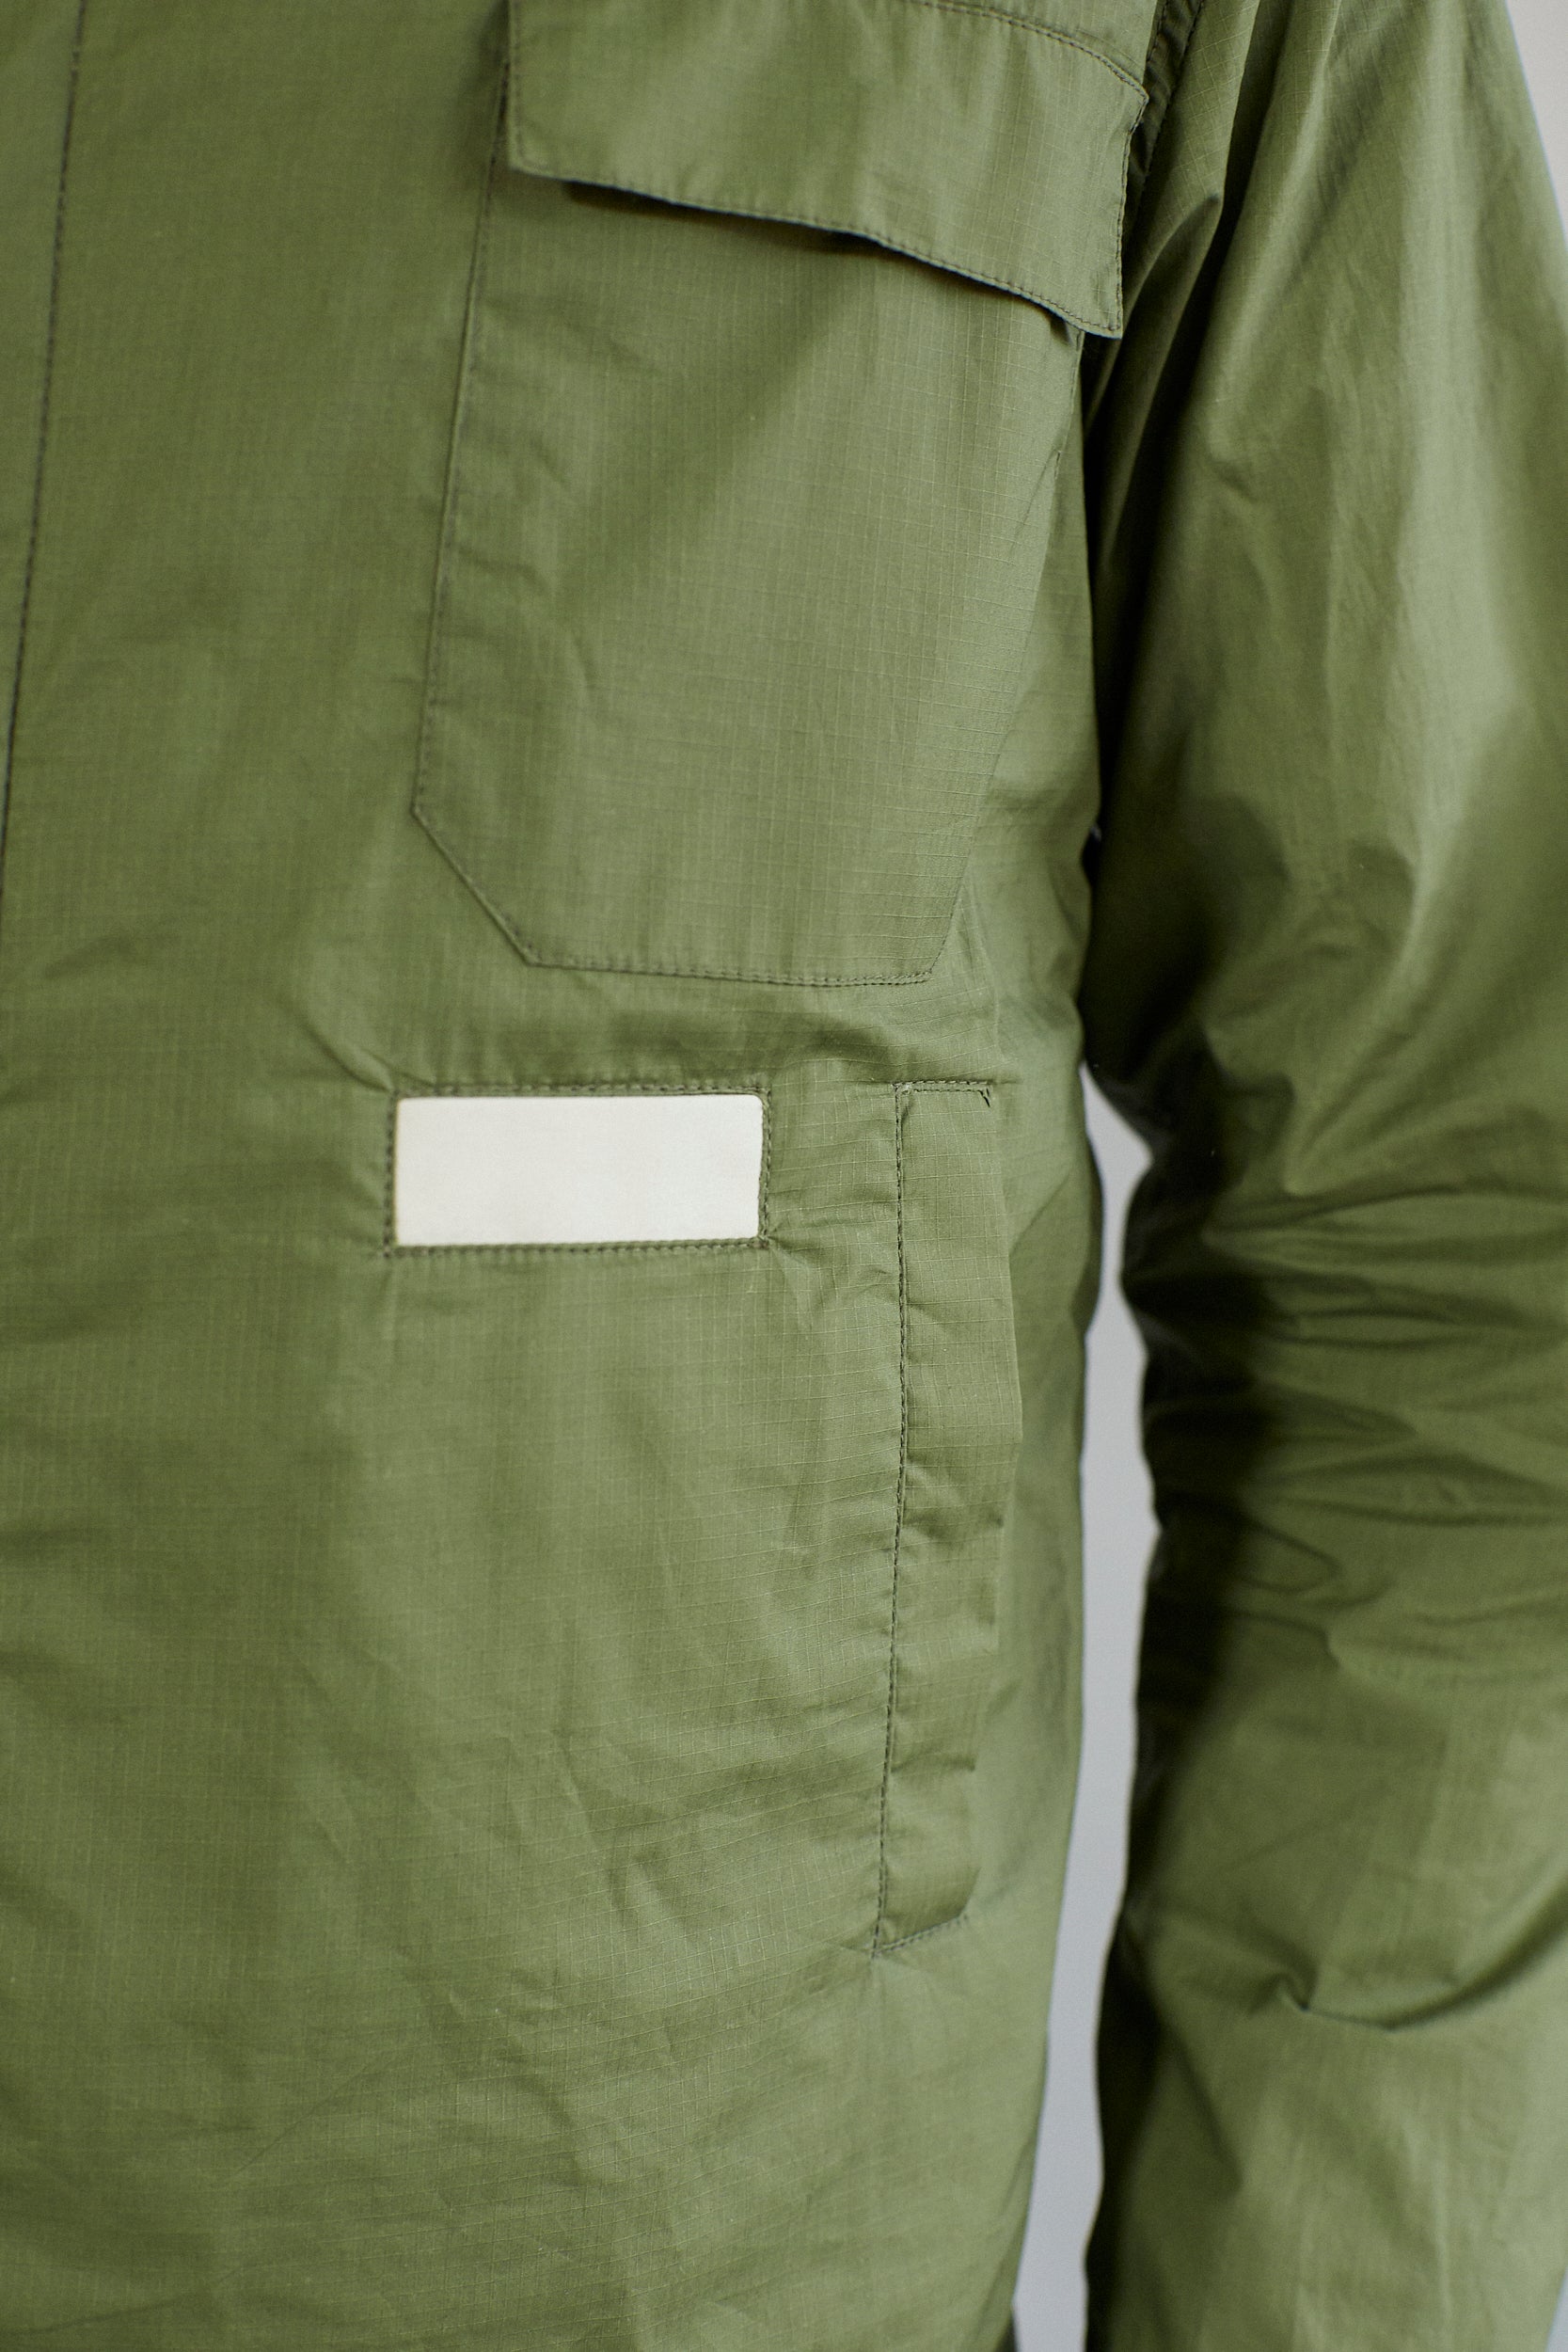 Ripstop Waxed Light jacket | Olive Green Cycle Jacket